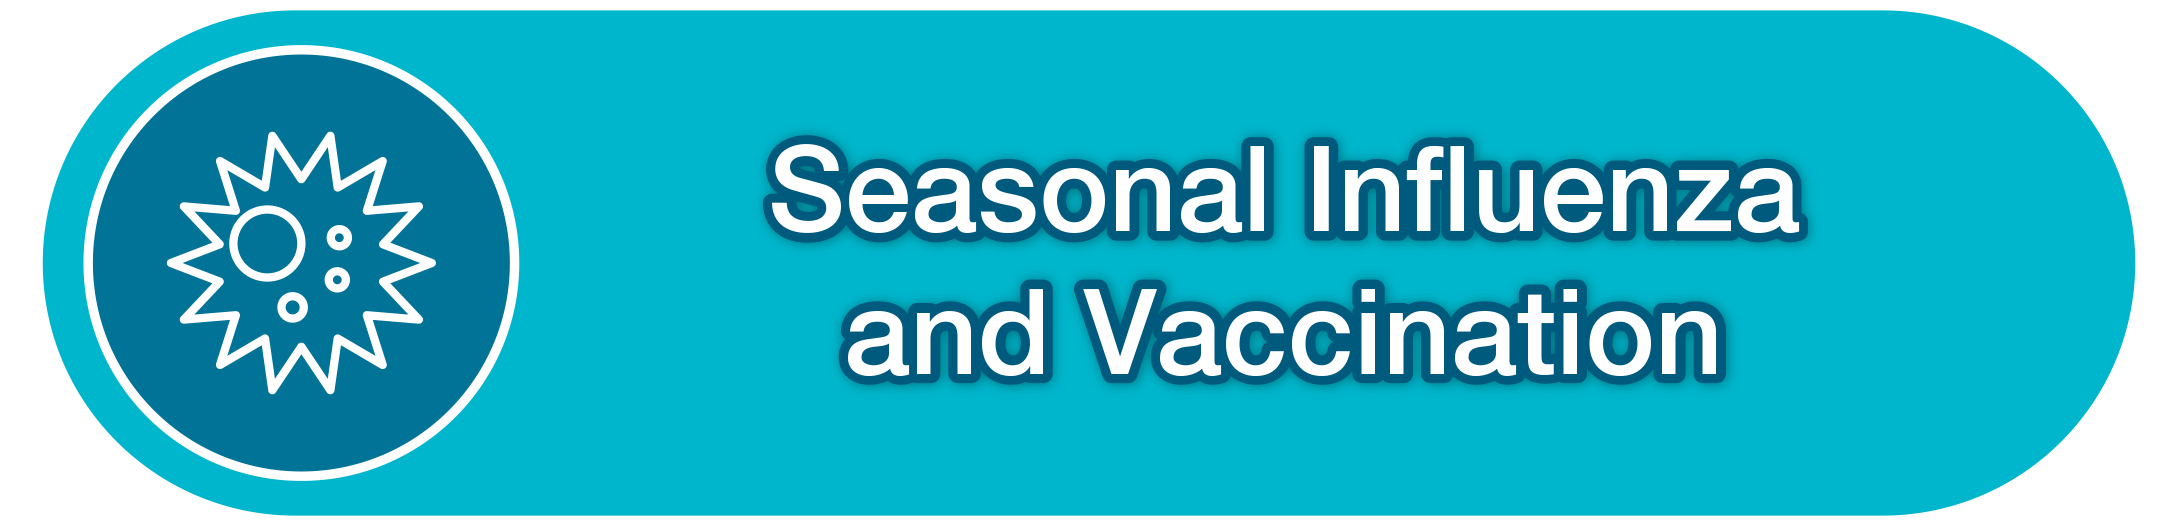 Seasonal Influenza and Vaccination